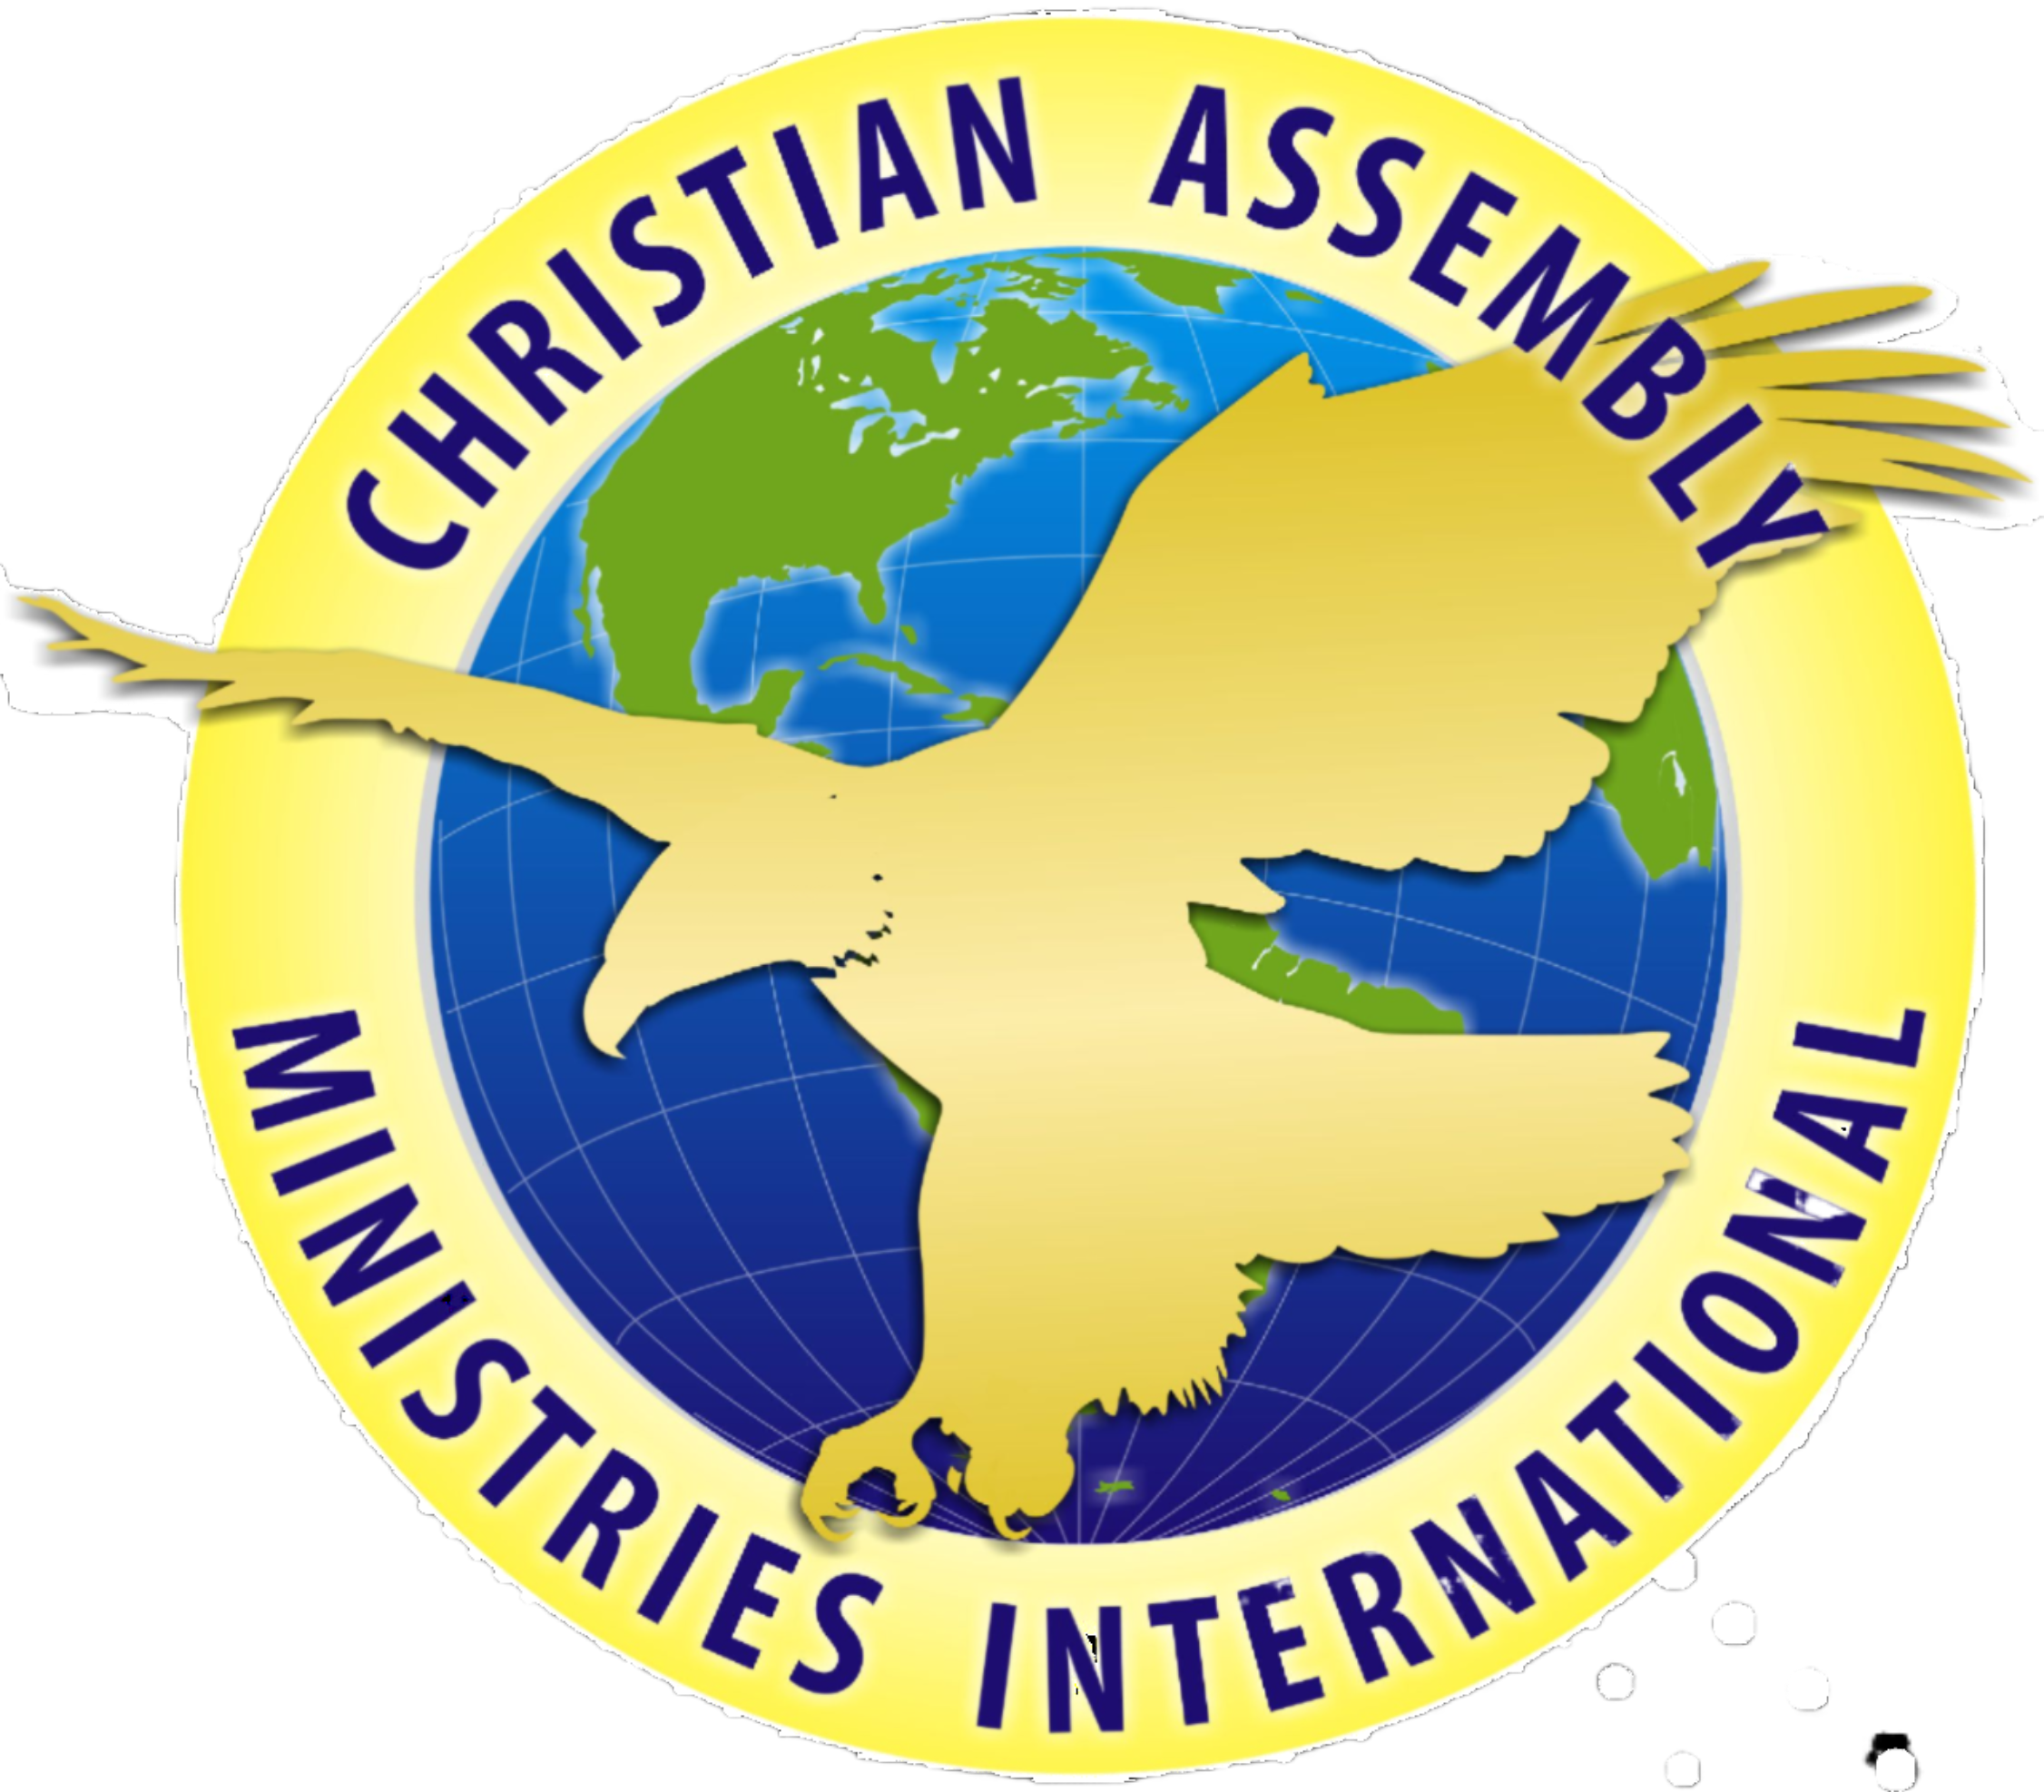 Christian Assembly Ministries International